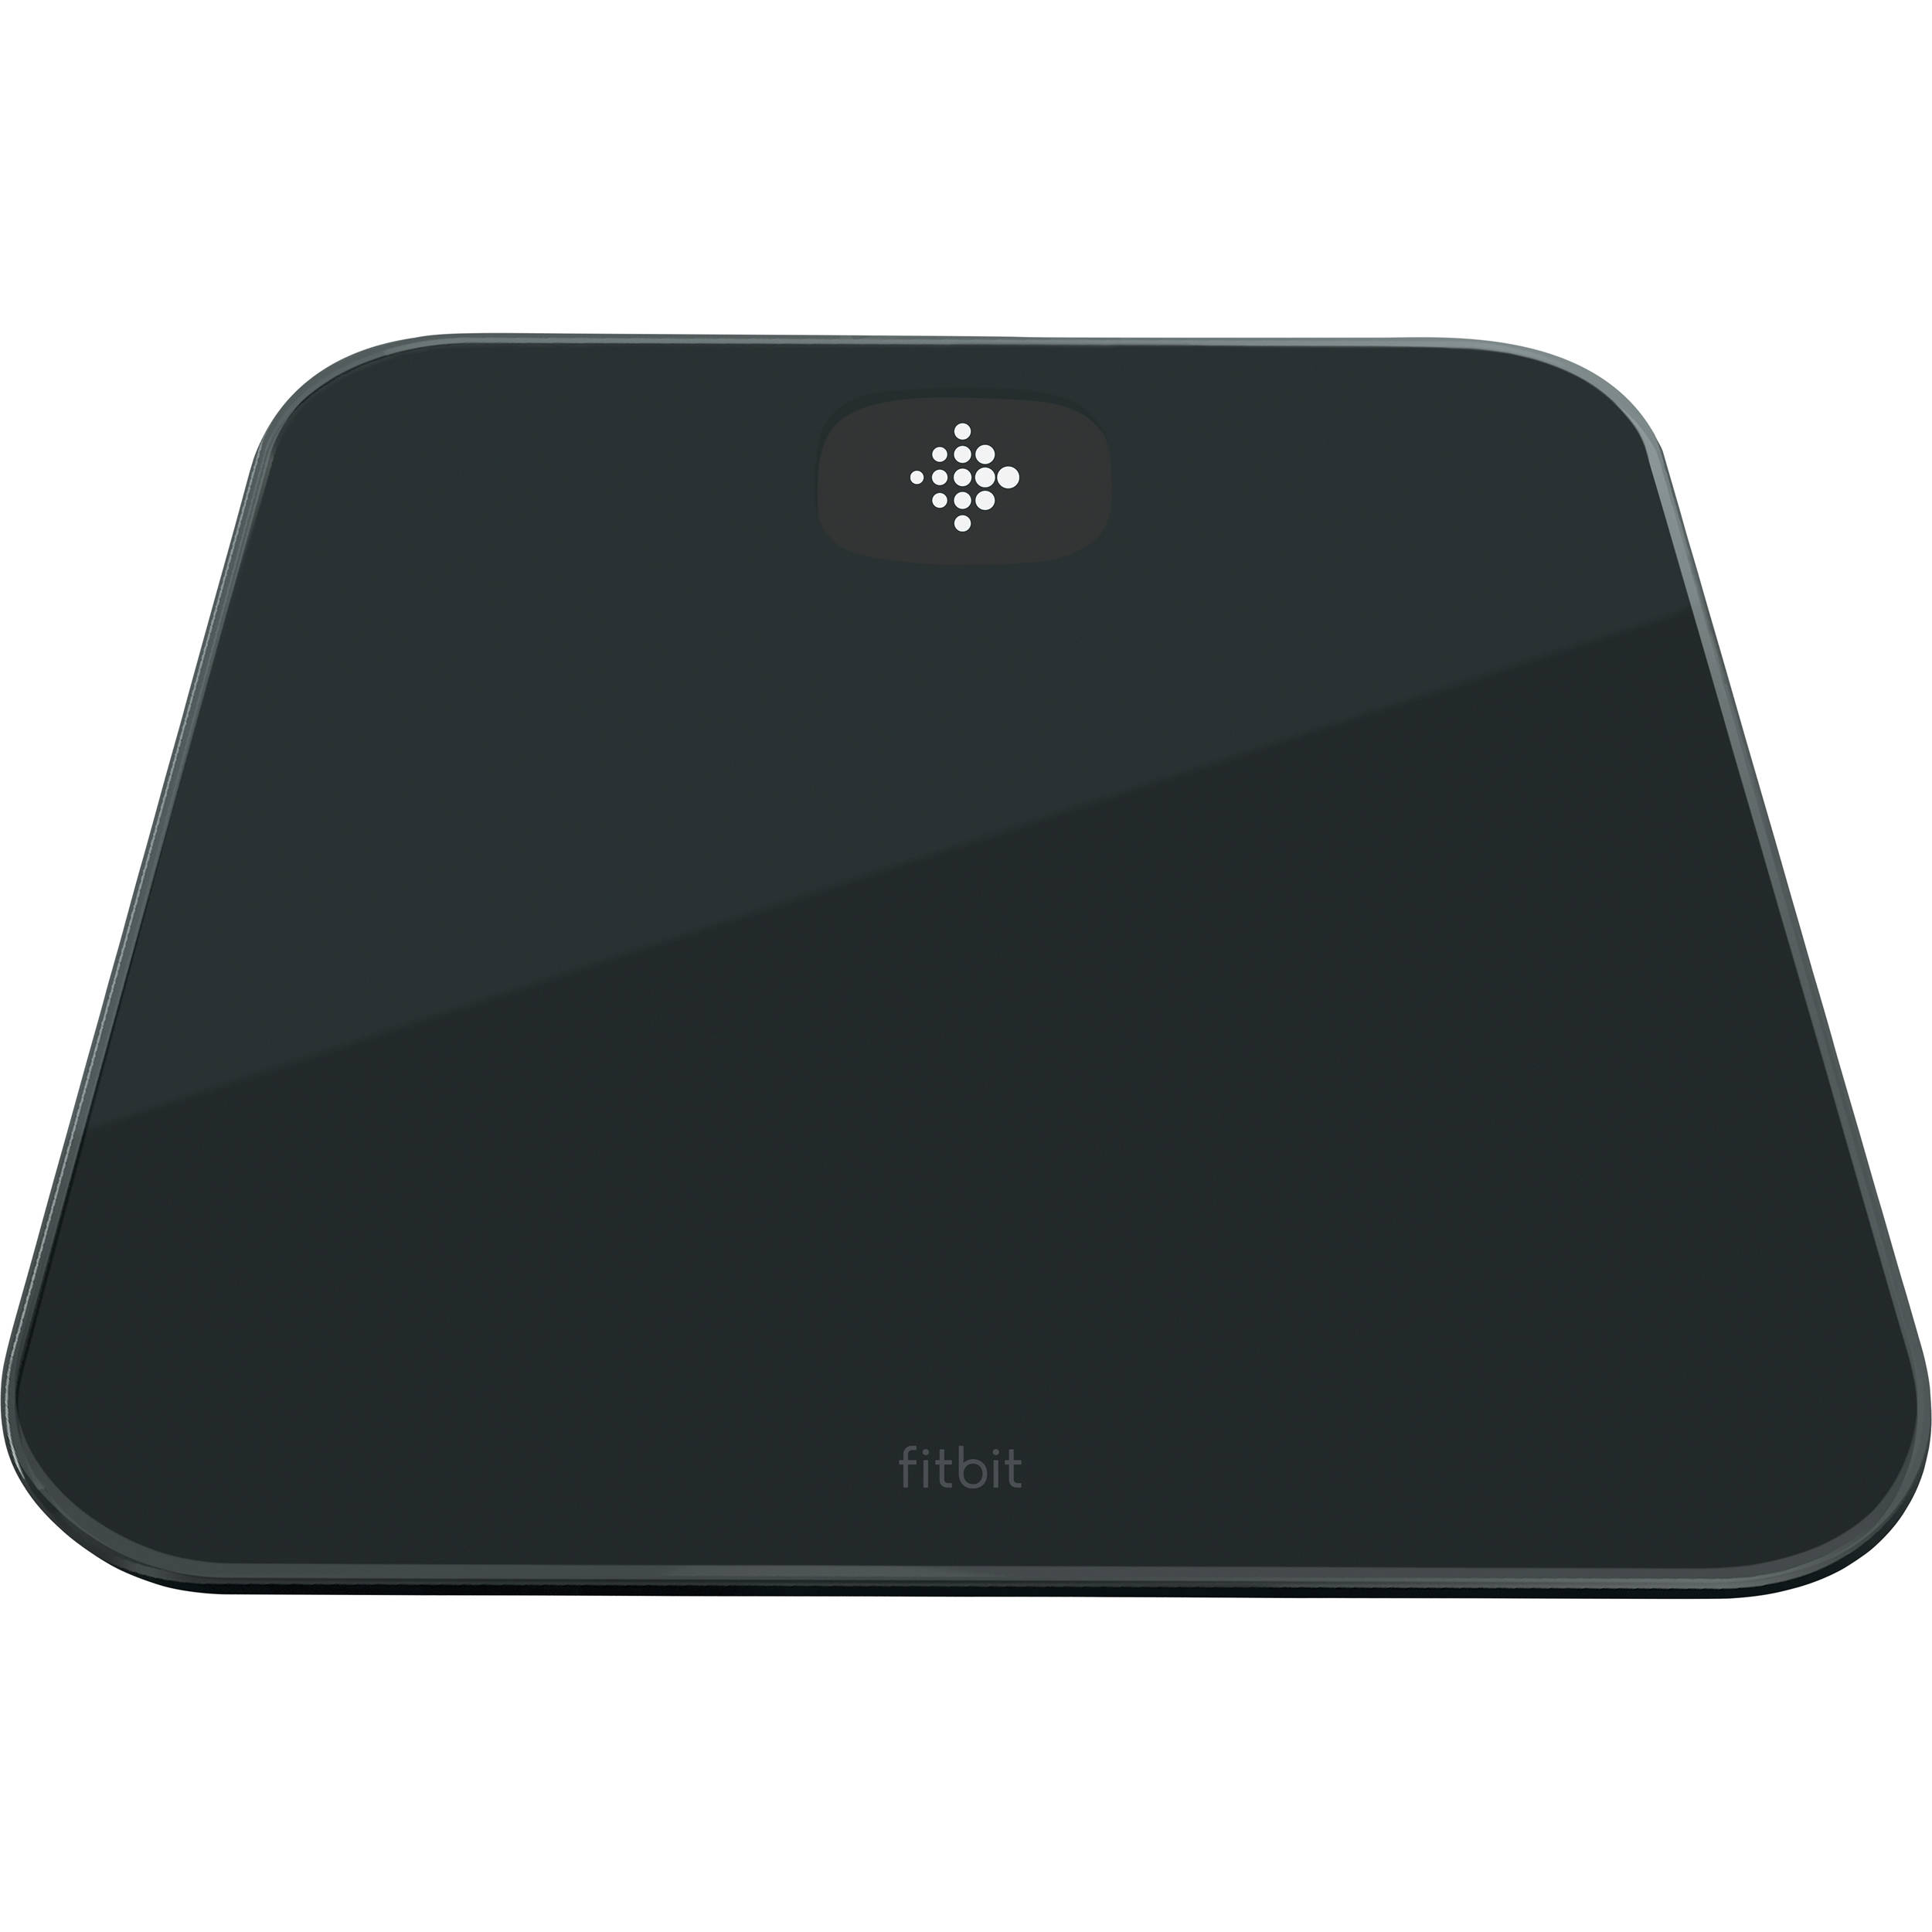 aria wifi smart scale